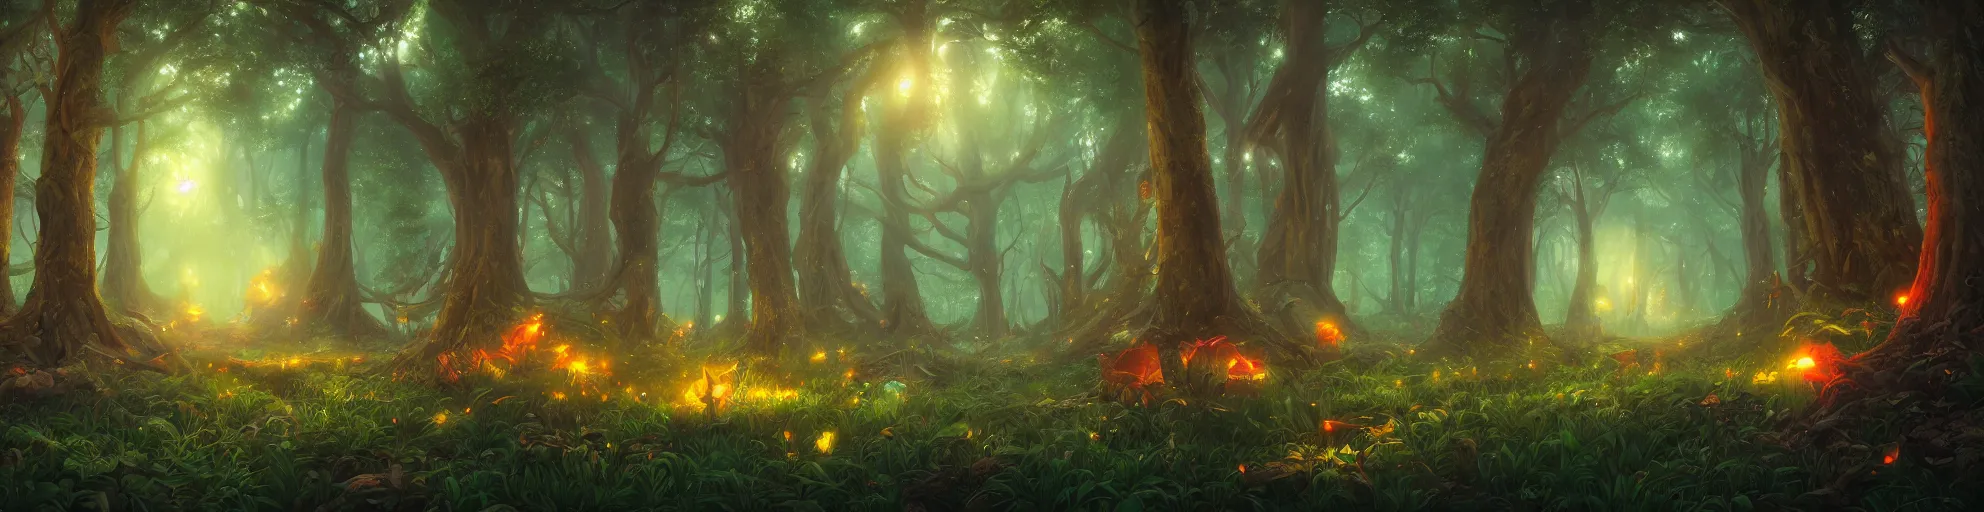 Prompt: Magical forest, fireflies, bioluminescent mushrooms, trending on artstation, wide angle, noah bradley